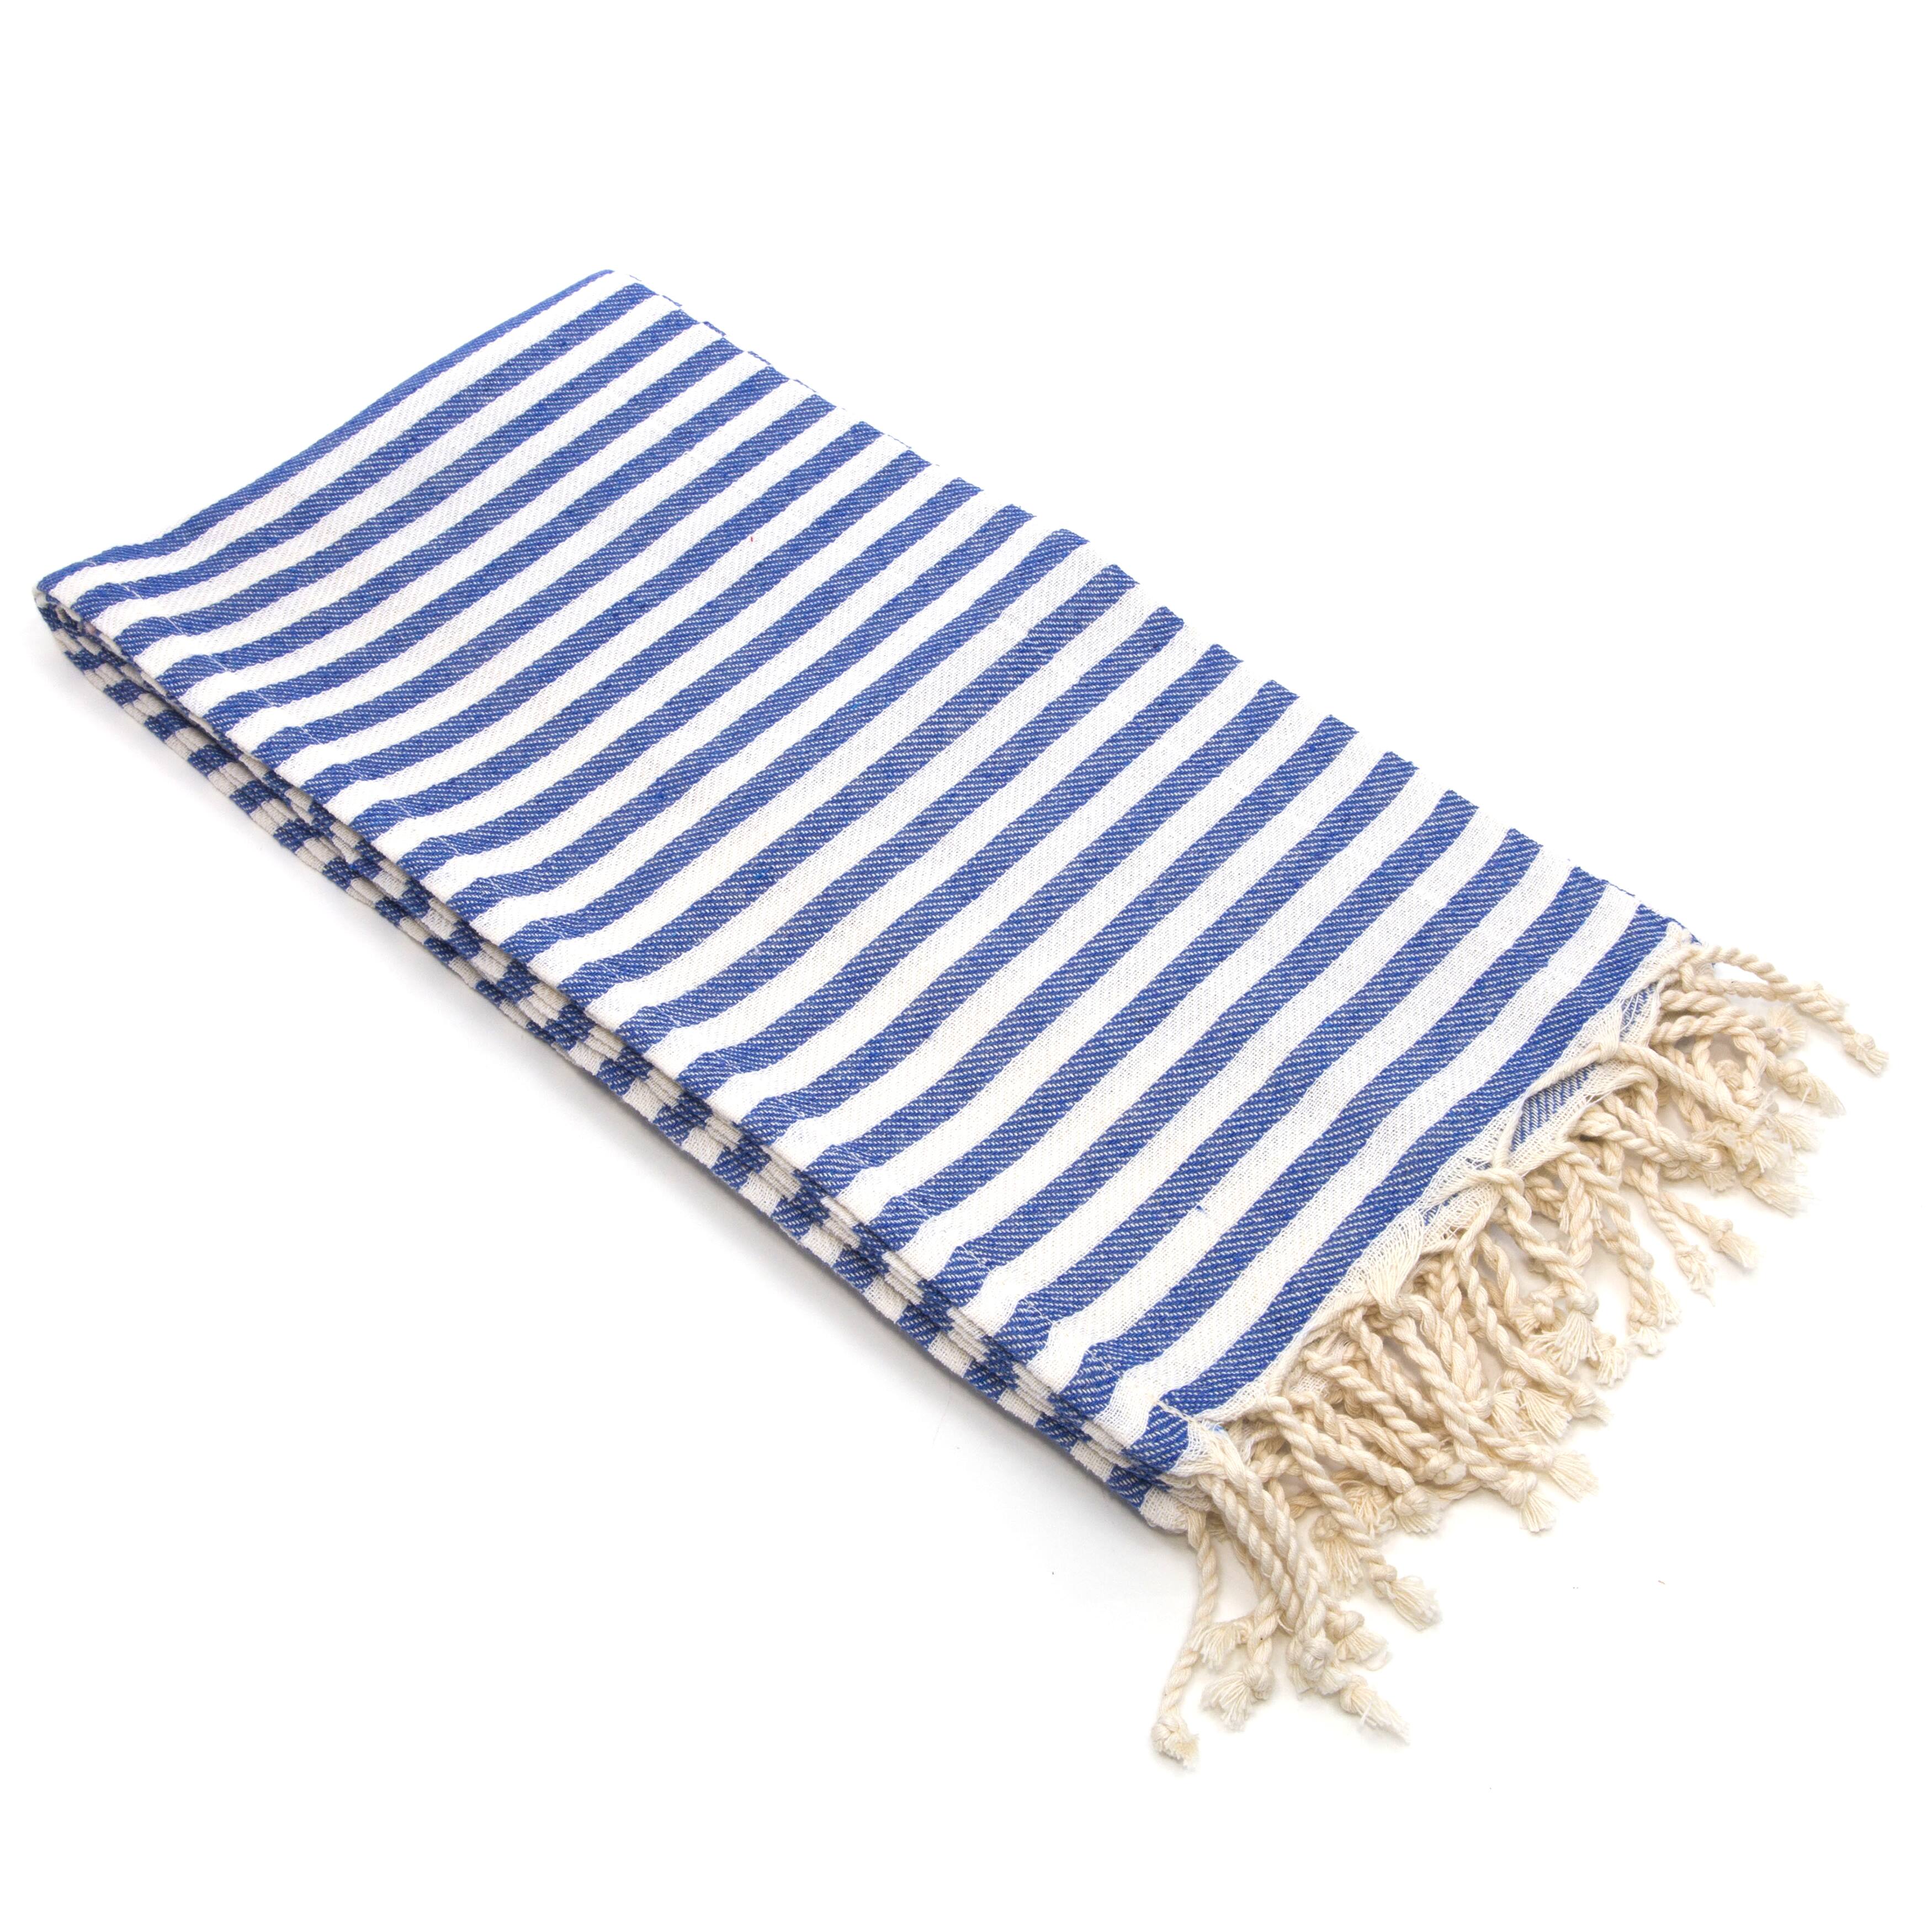 Authentic Pestemal Fouta True Blue Turkish Cotton Bath/ Beach Towel